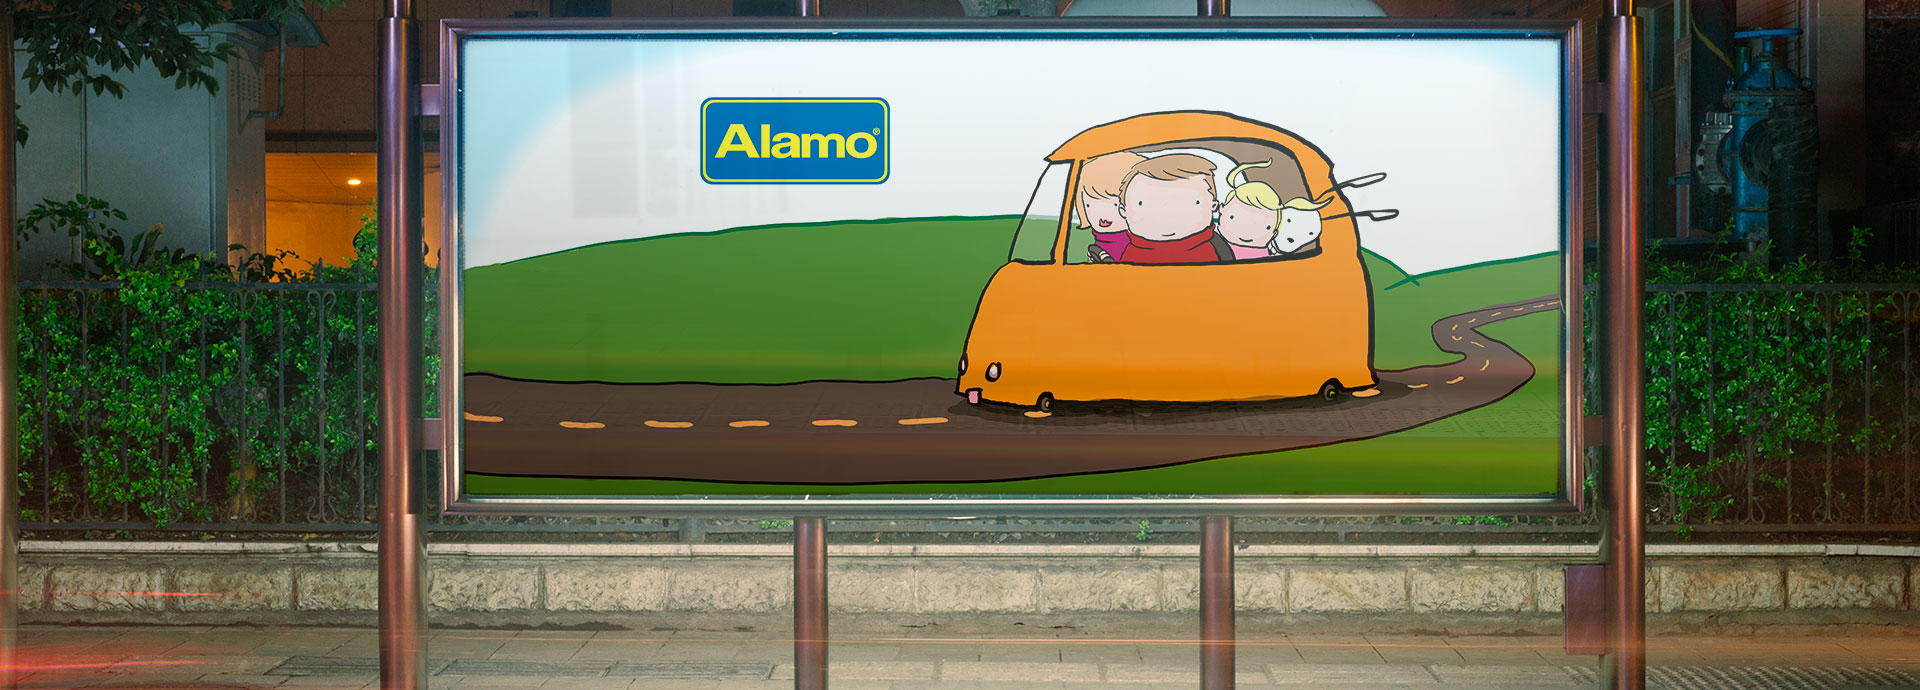 Alquiler de Autos Alamo | Alamo Rent a Car | RentingCarz Argentina